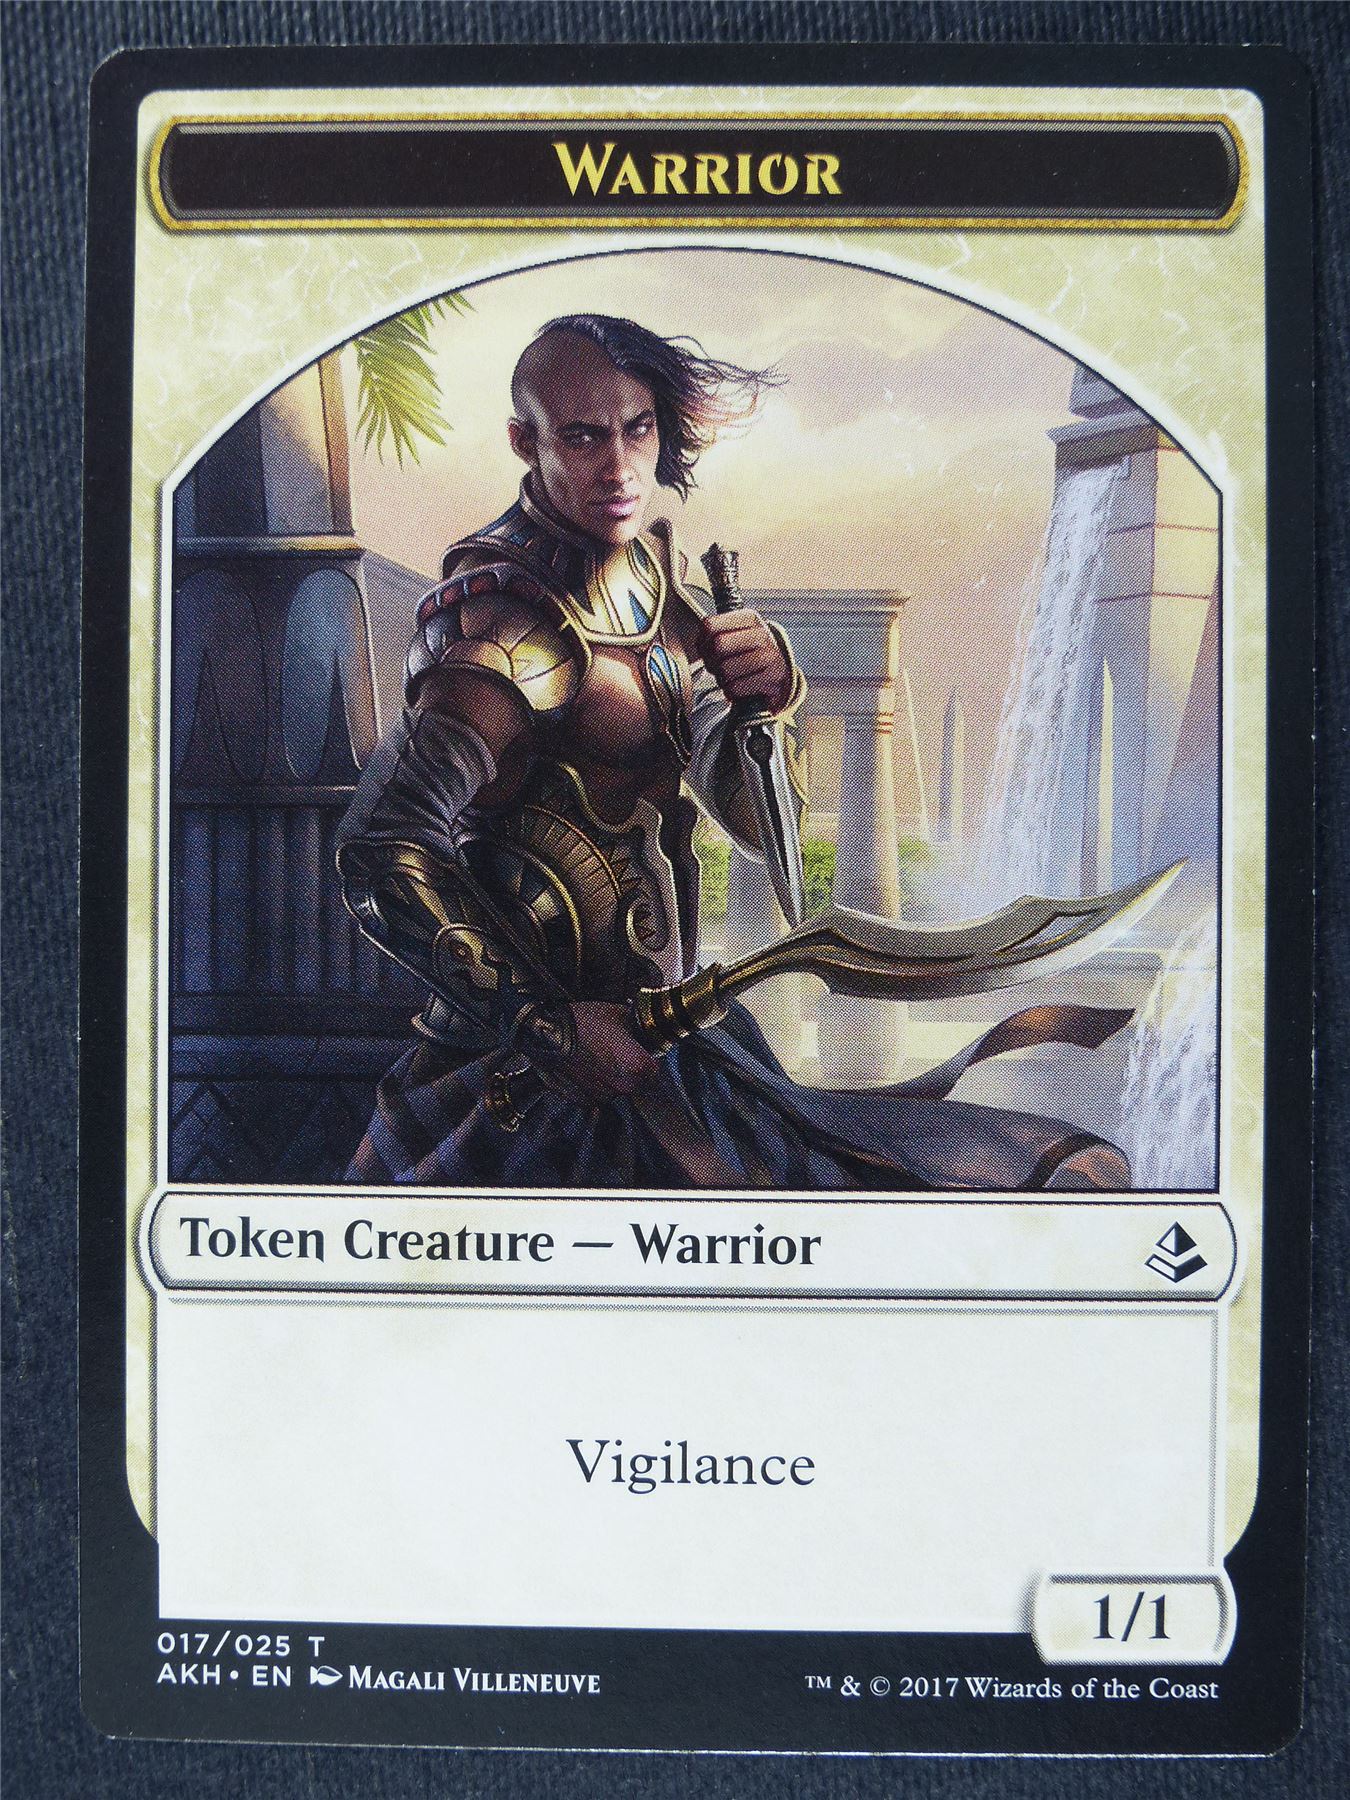 Labyrinth Guardian / Warrior Token - Mtg Magic Cards #1R7